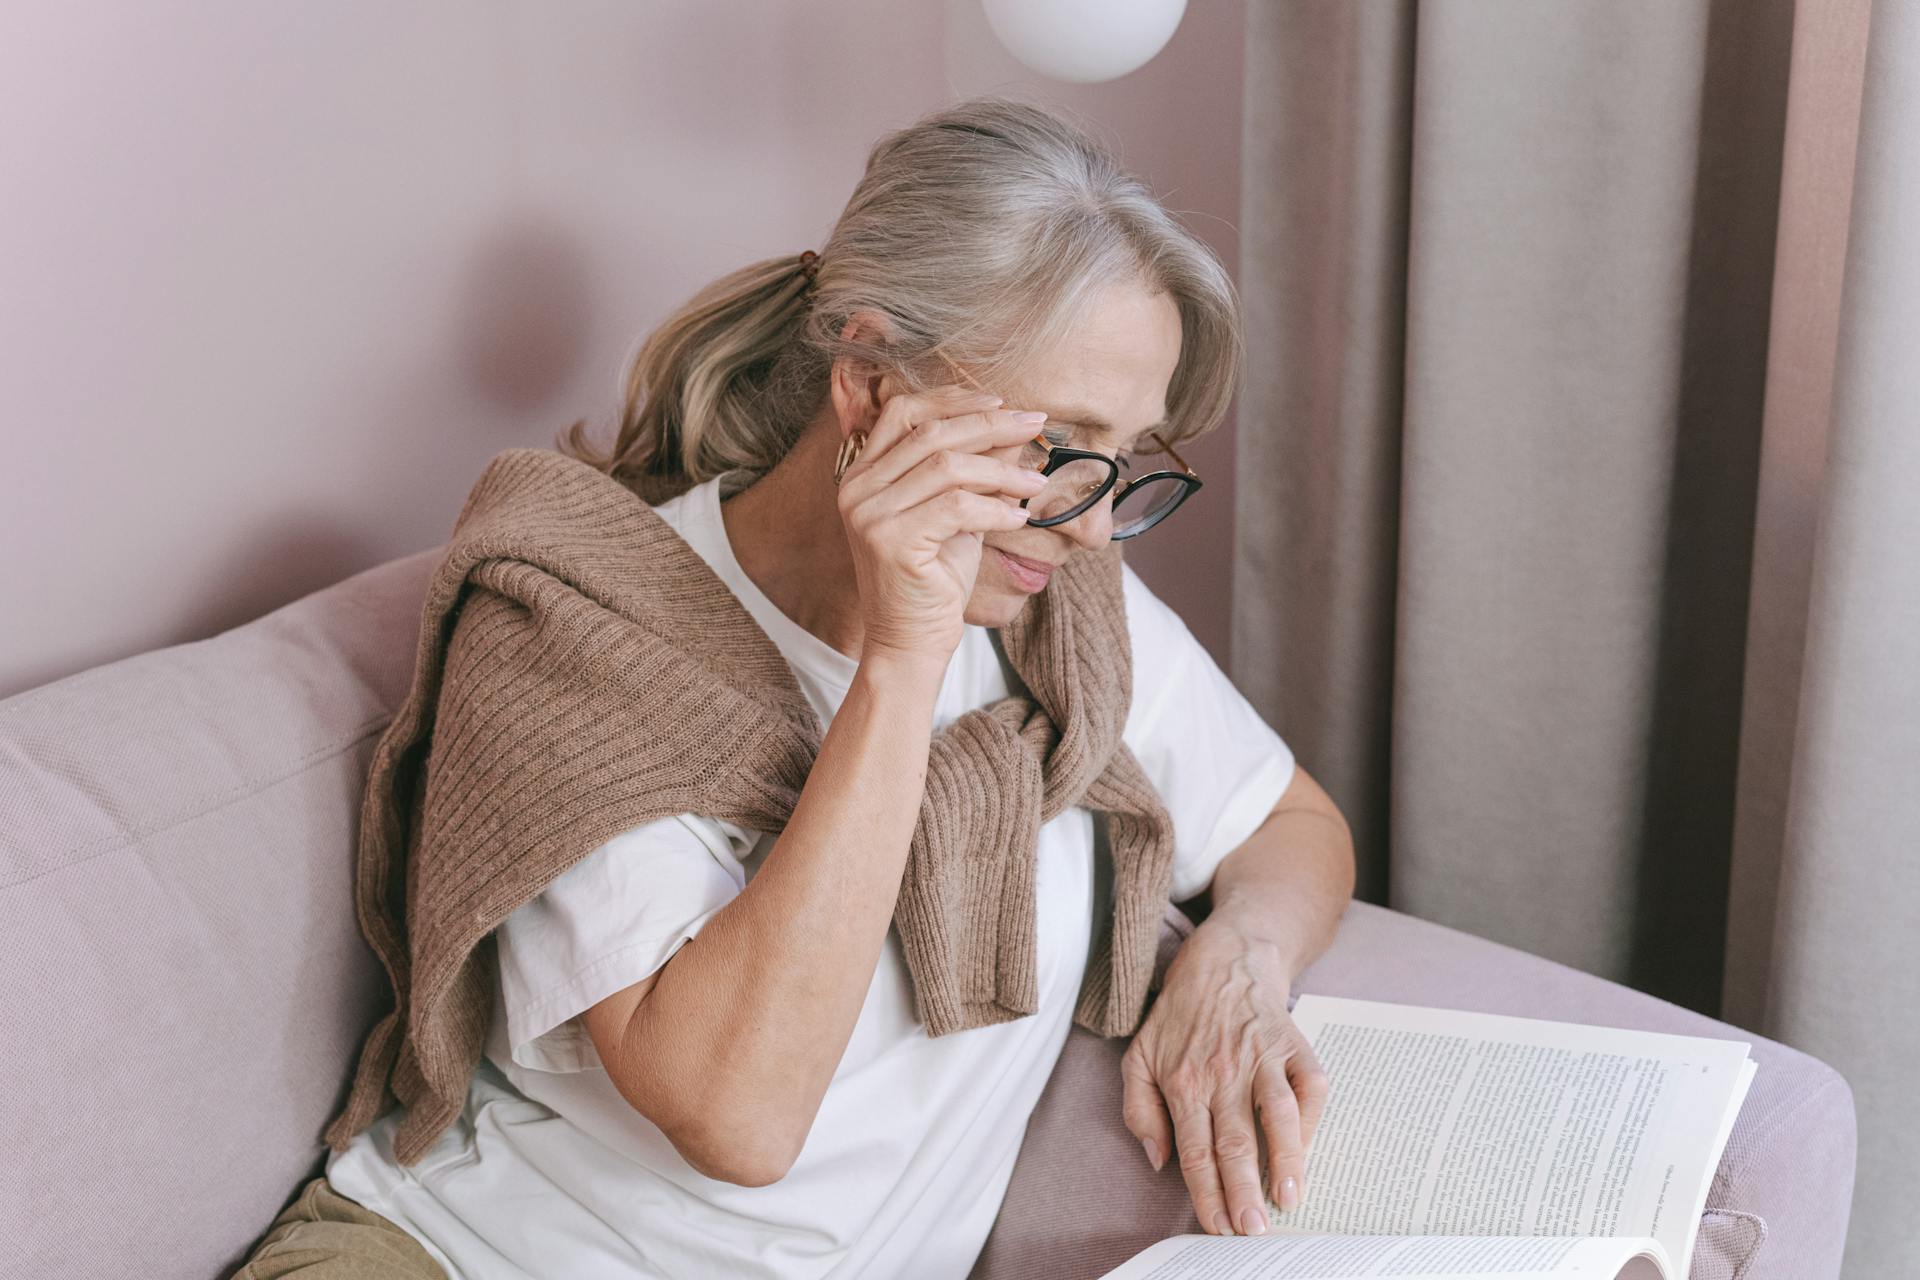 An elderly woman reading a book | Source: Pexels